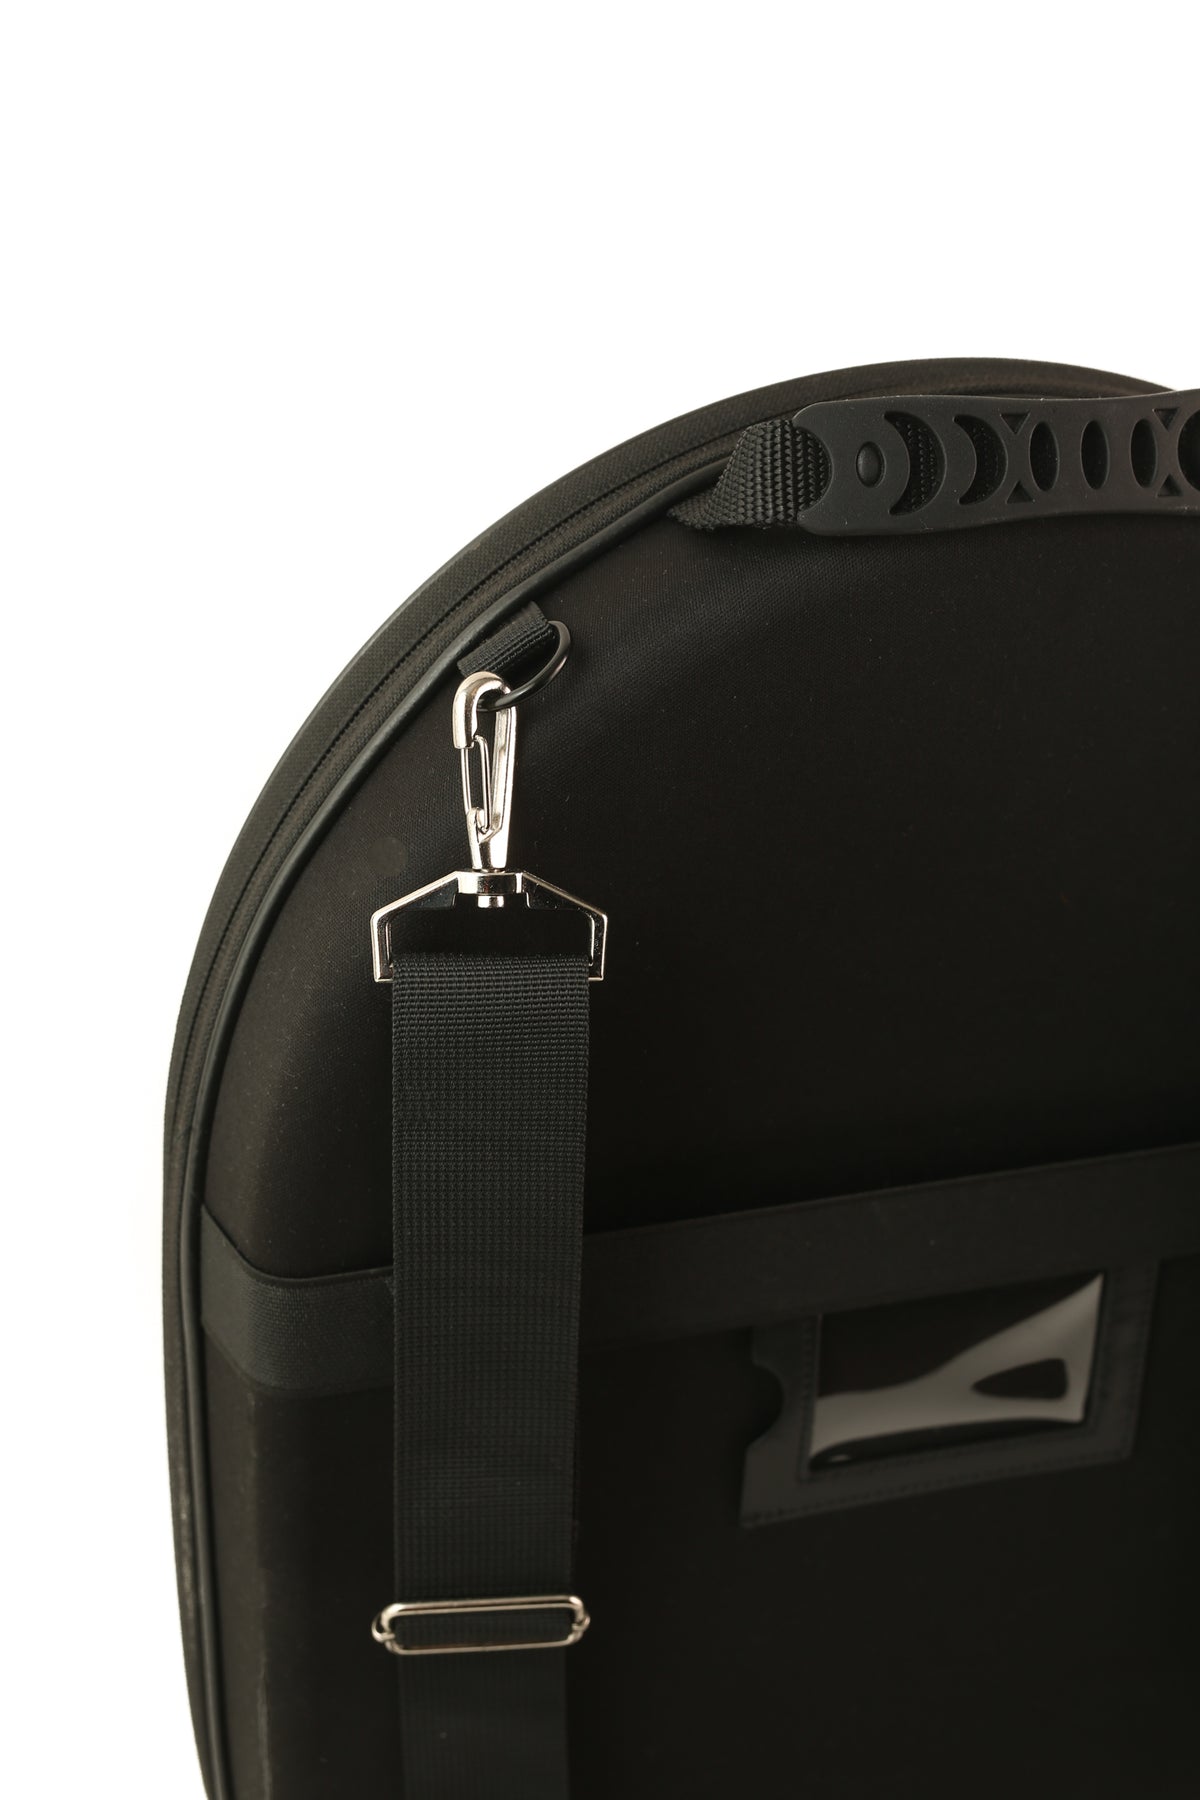 Travel Hat Box Crush-proof Fedora Travel Case Carry On Hat luggage